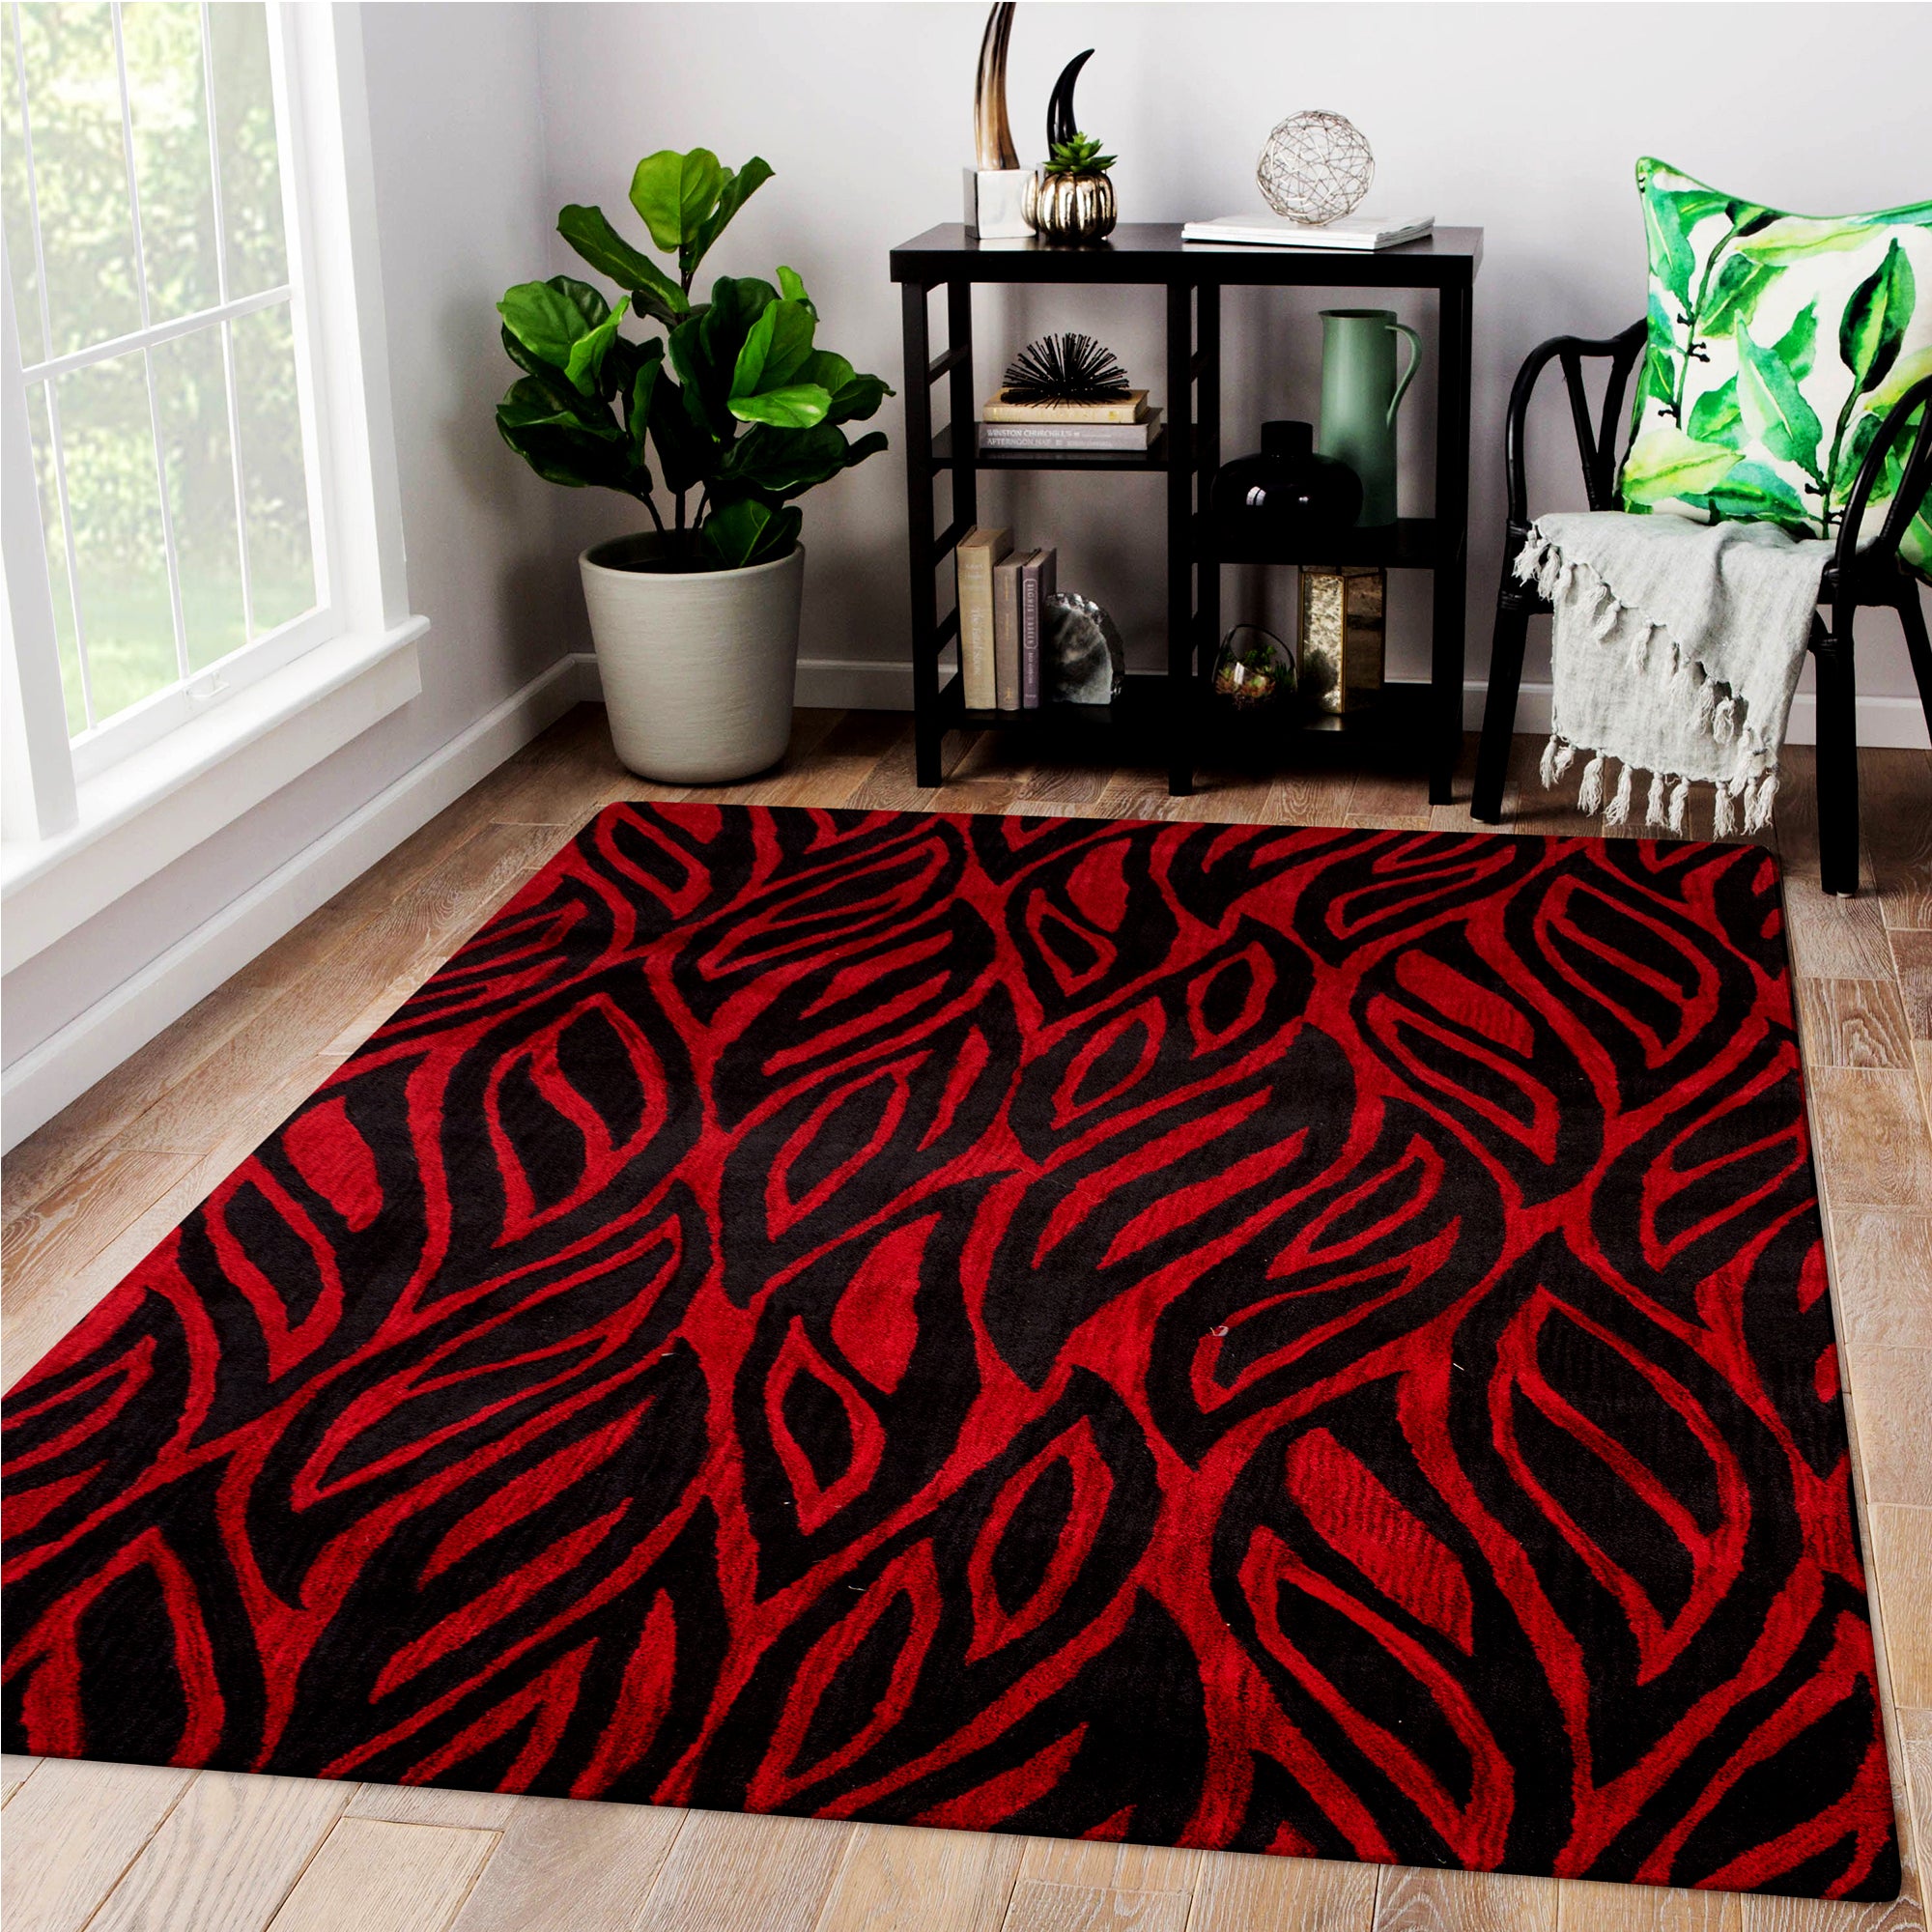 Red Woolen Handmade Bhadohi Carpet